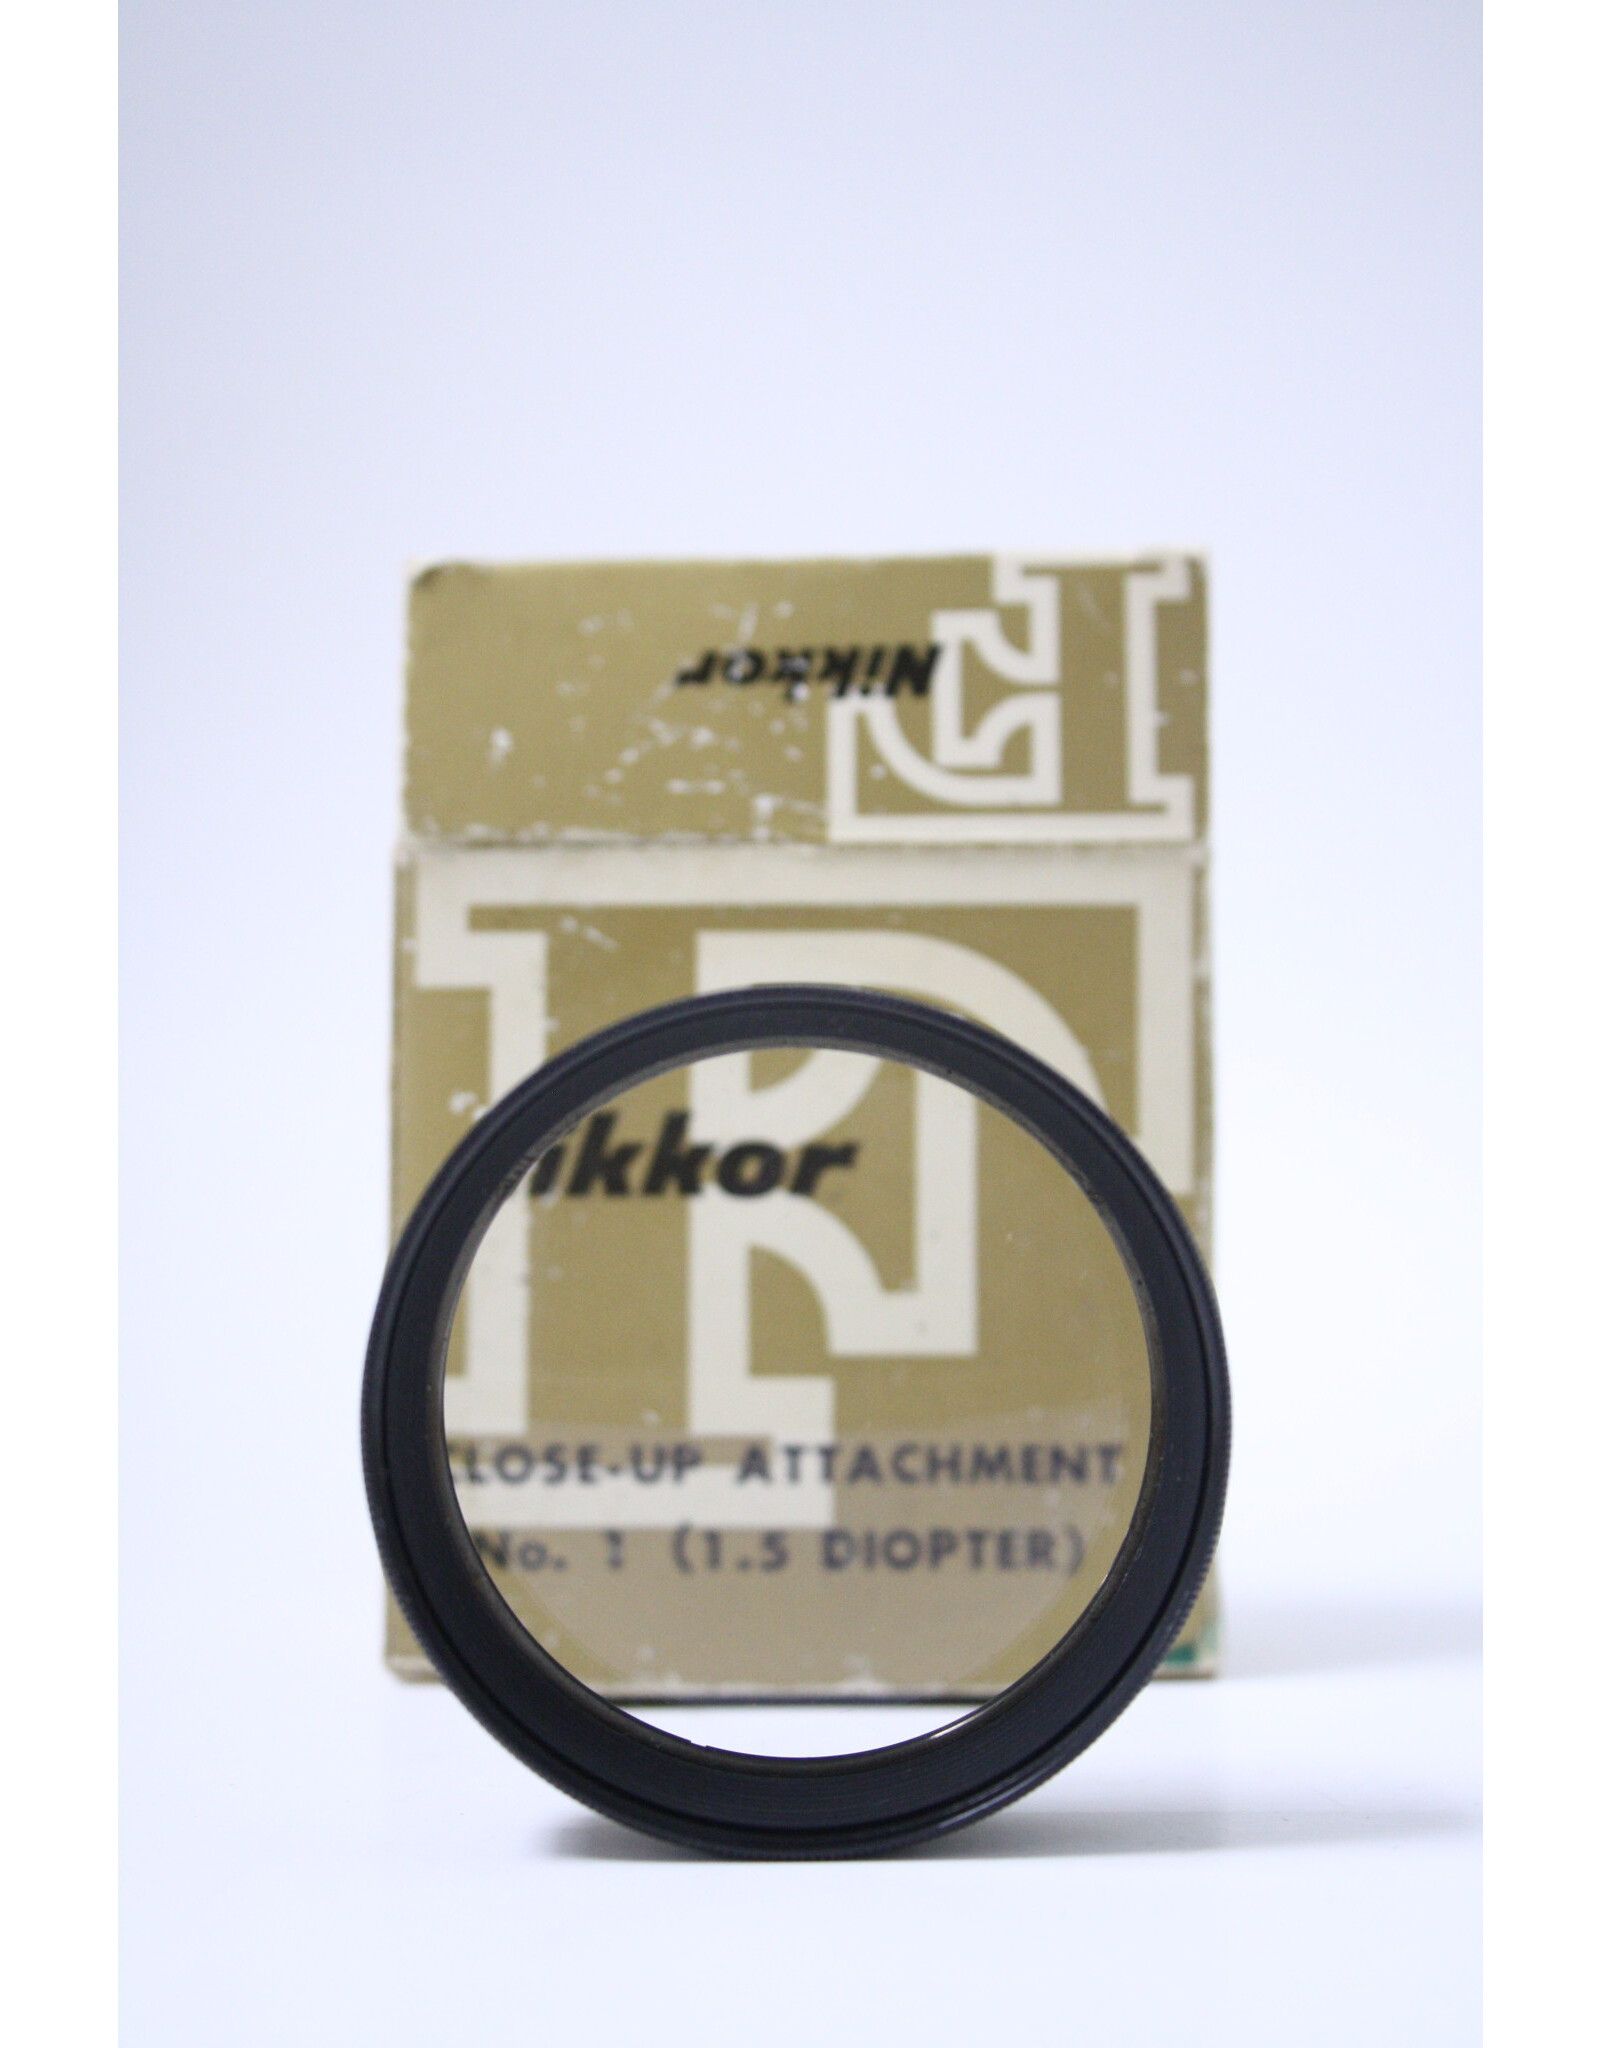 Nikon Nikon Nikkor Close-Up Attachment No. 1 (1.5 Diopter) | NOS (Pre-owned)